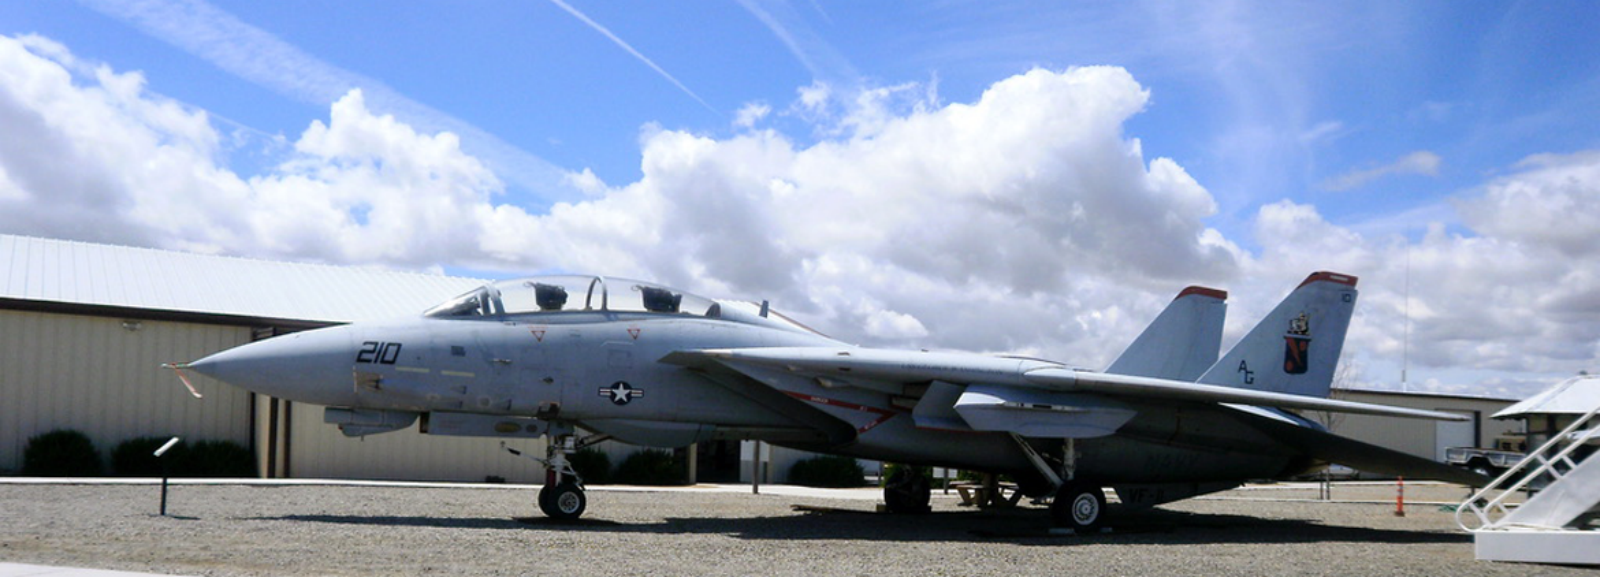 Northrop-Grumman F-14B